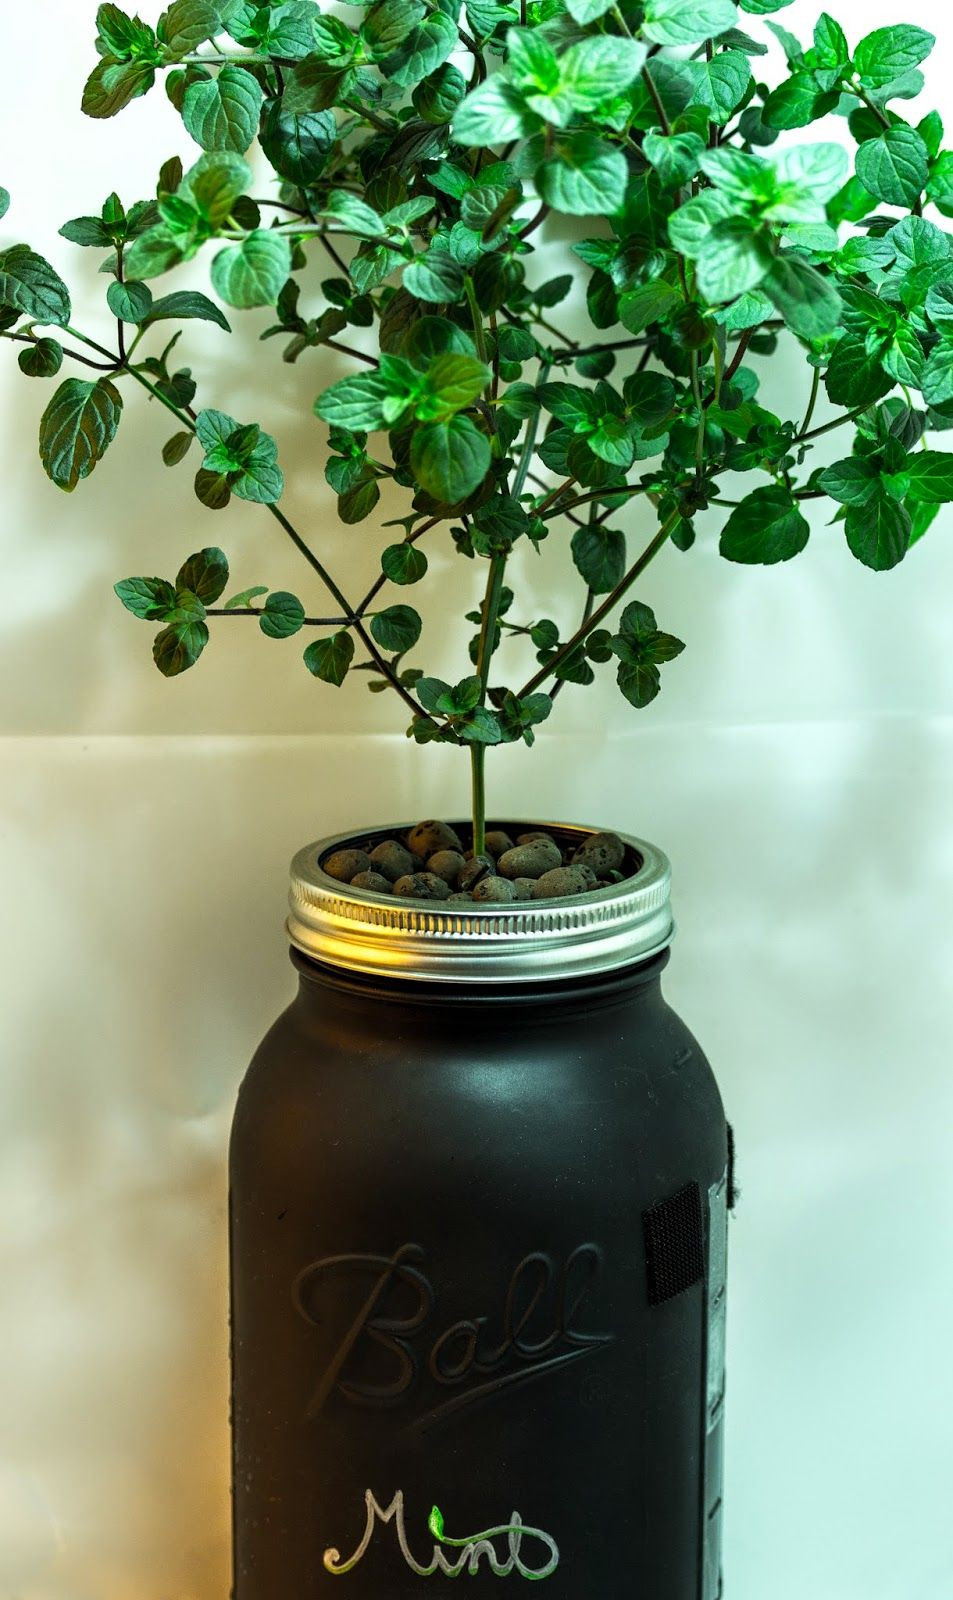 Best ideas about Hydroponic Herb Garden DIY
. Save or Pin Macro Garden DIY Mason Jar Non Circulating Hydroponics Now.